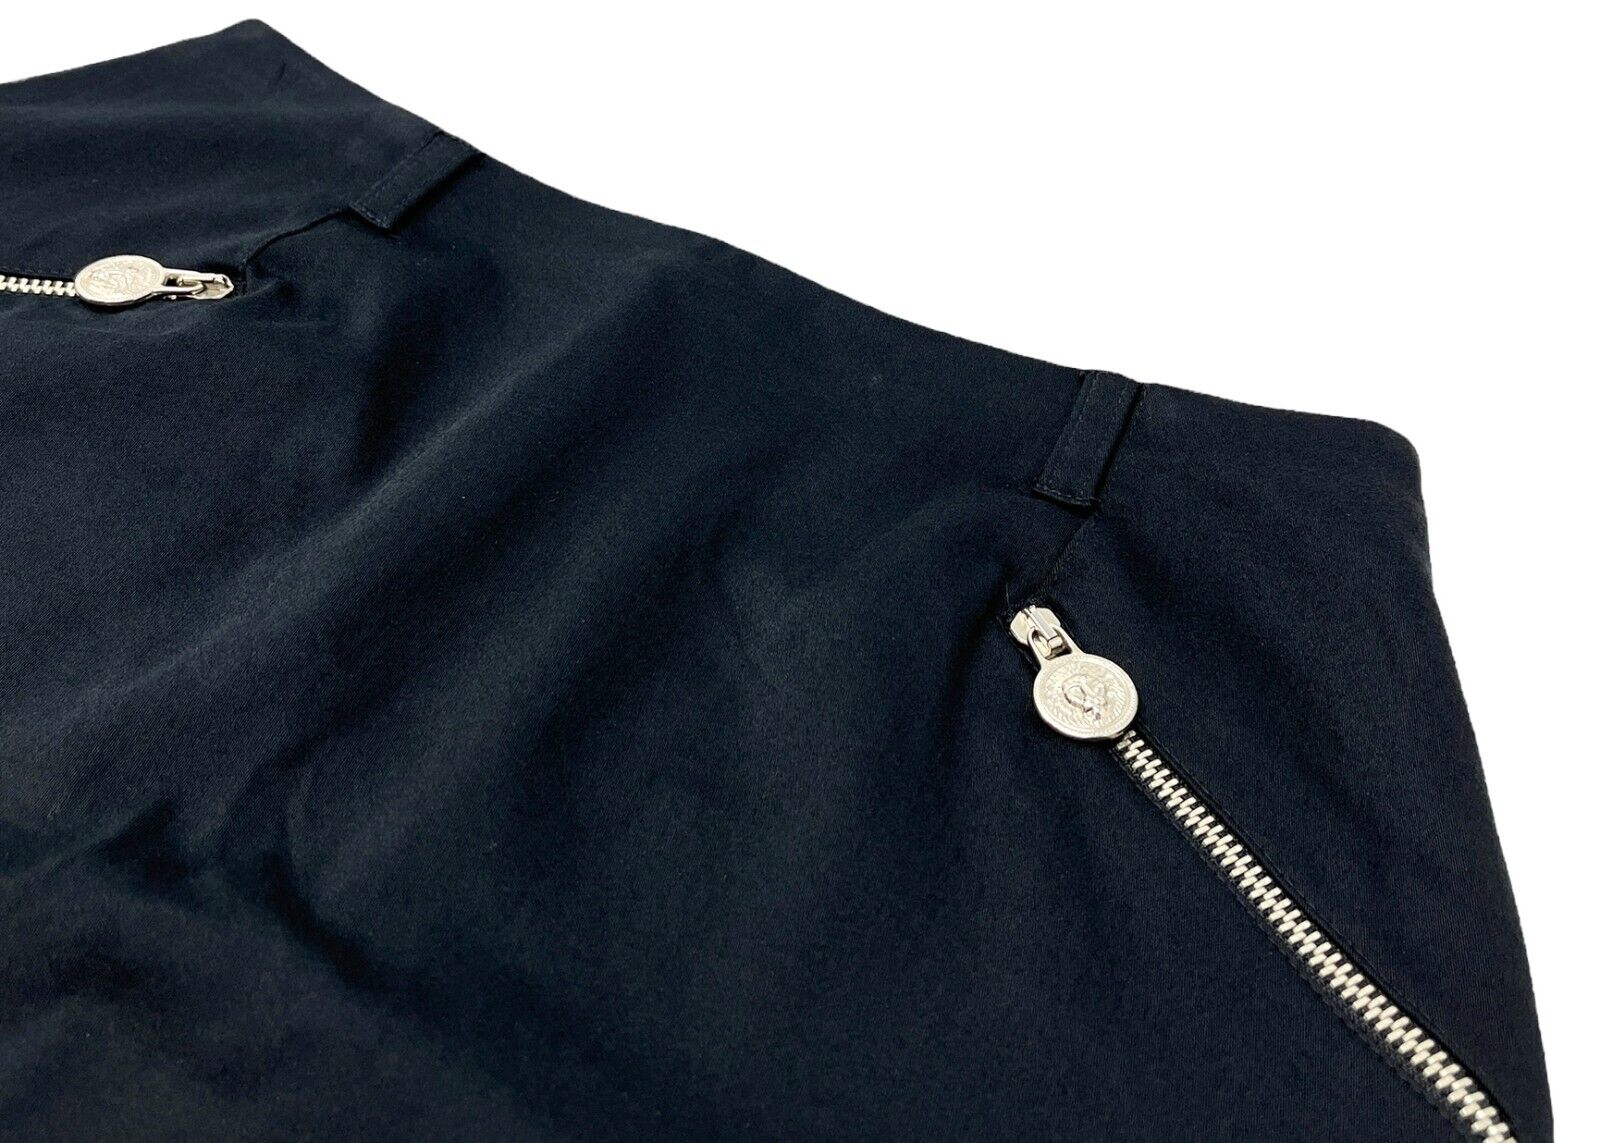 VERSUS Vintage Skirt Set #38 #40 Top Lion Charm Viscose Black Silver Zip RankAB+